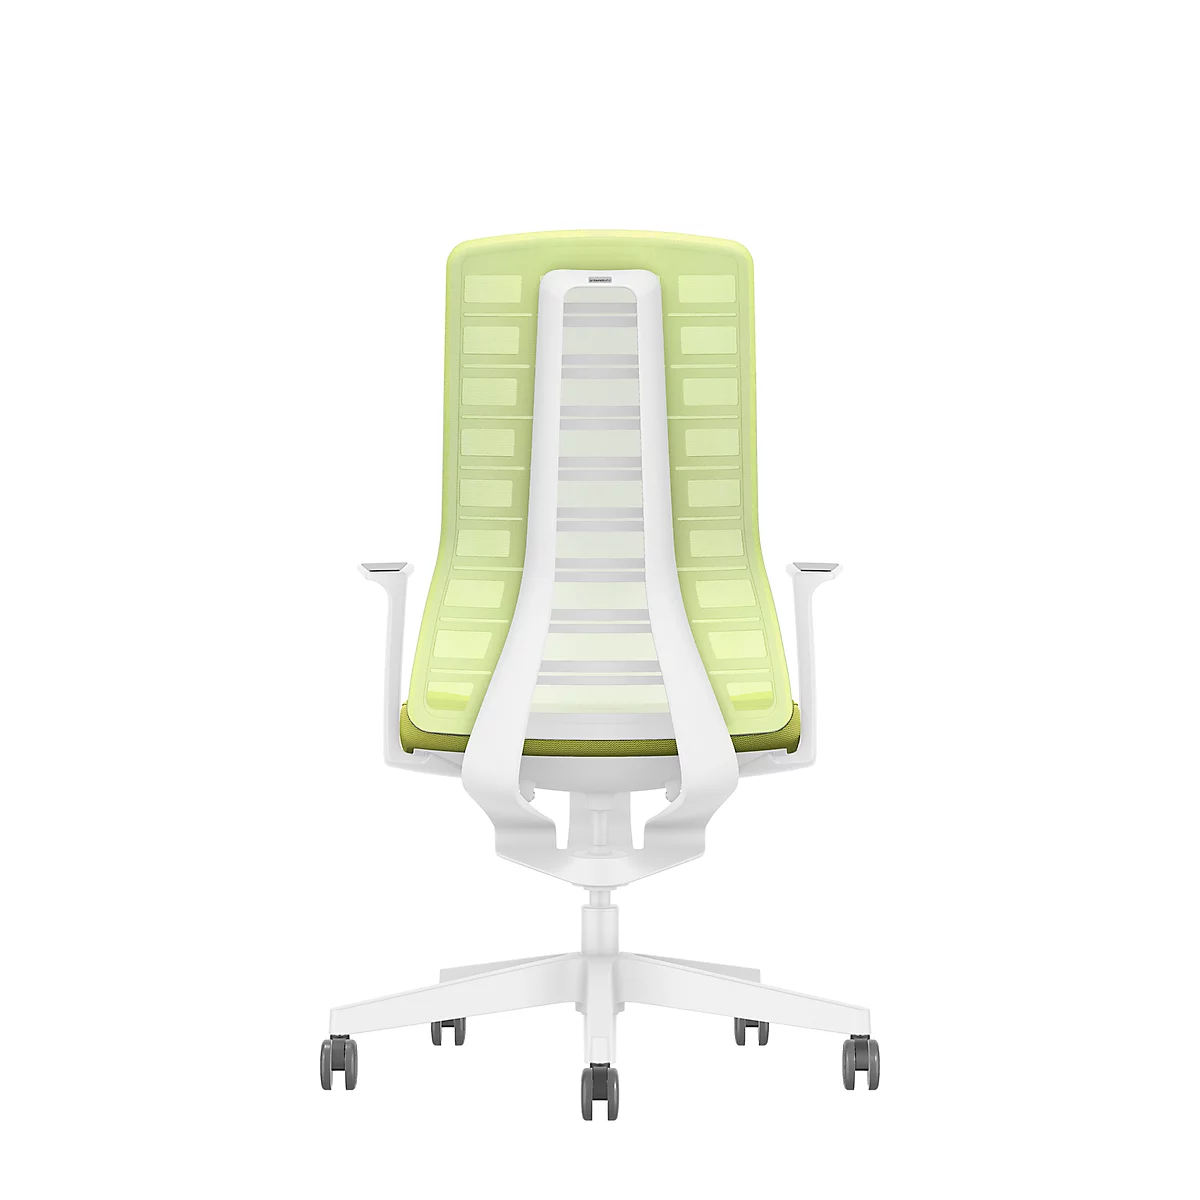 Interstuhl Bürostuhl PUREis3, feste Armlehnen, 3D-Auto-Synchronmechanik, Muldensitz, Netzrücken, maigrün/weiß